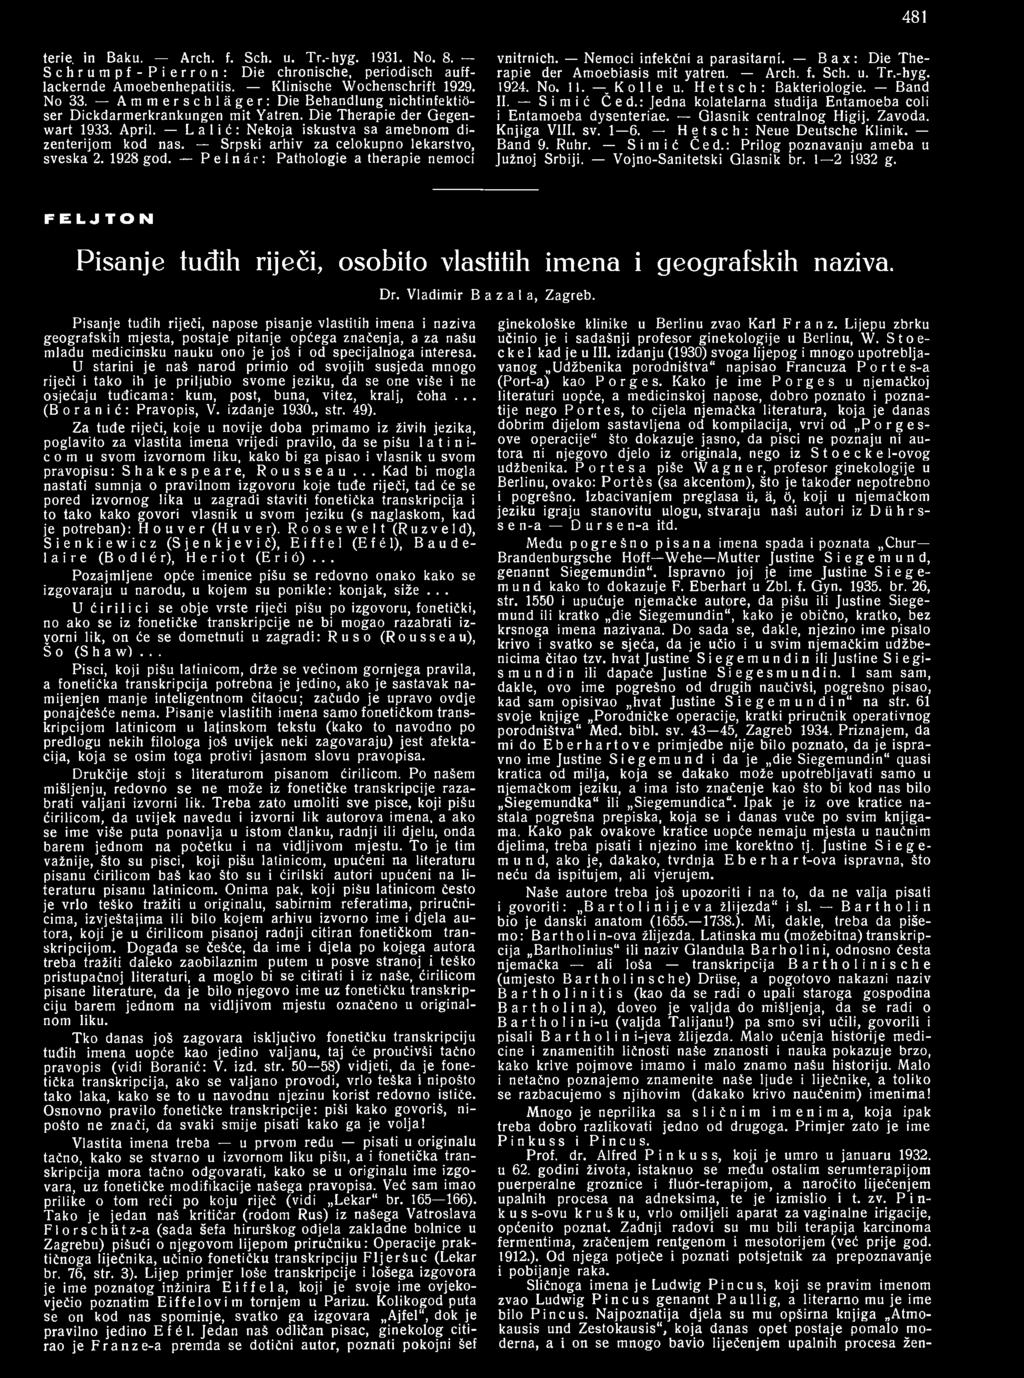 1 6. Hetsch: Neue Deutsche Klinik. Band 9. Ruhr. Simić Č ed.: Prilog poznavanju ameba u Južnoj Srbiji. Vojno-Sanitetski Glasnik br. 1 2 1932 g.